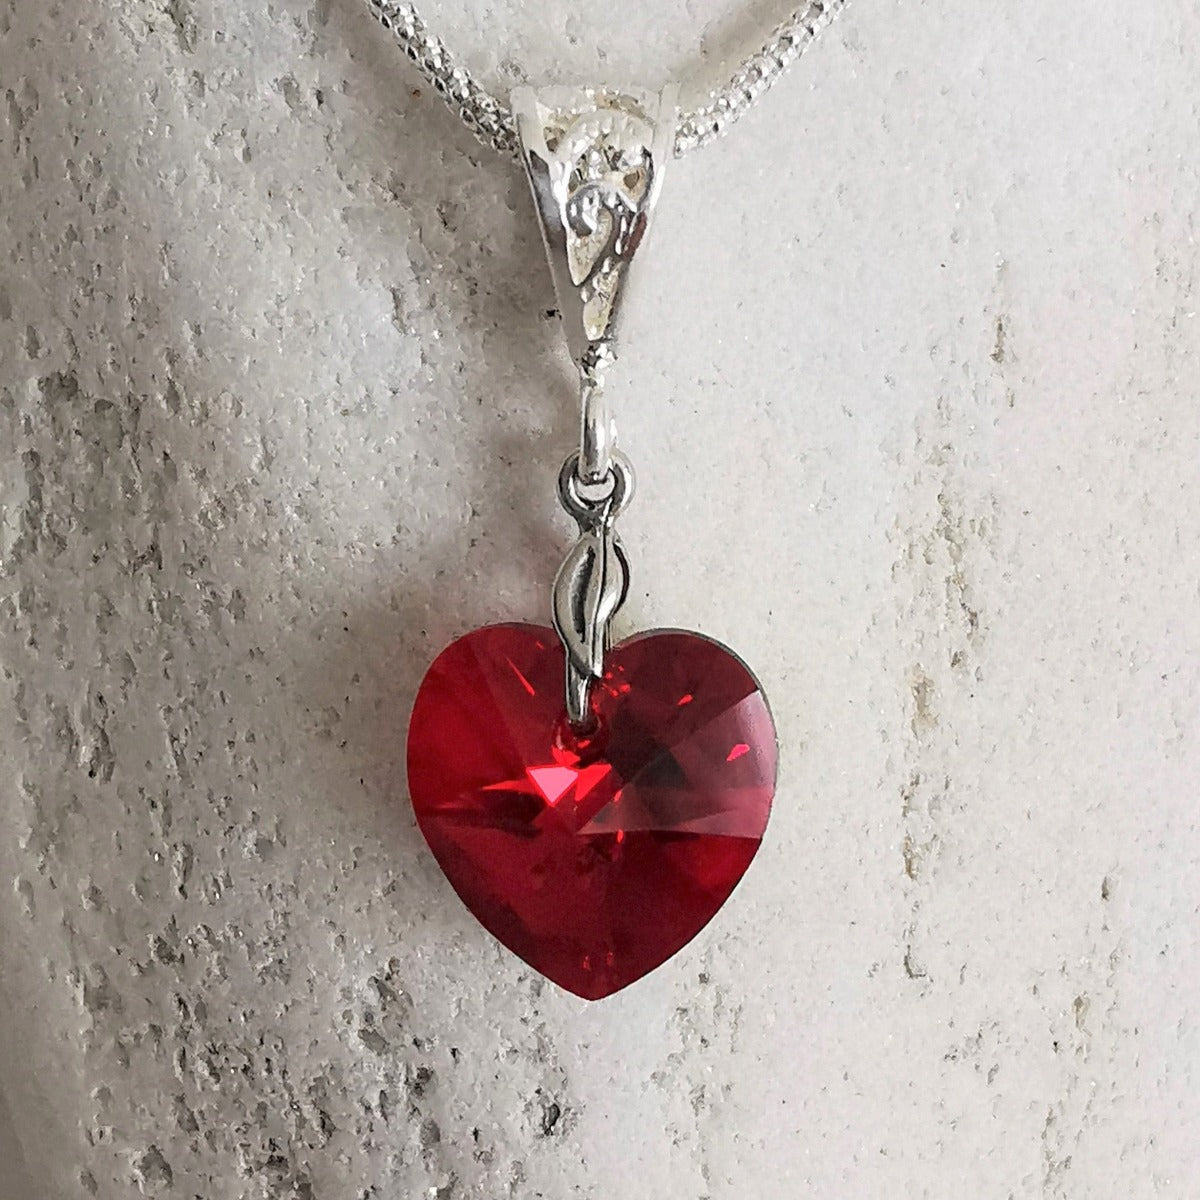 Krystall ørepynt i sølv - Siam rød hjerteformet 10 mm